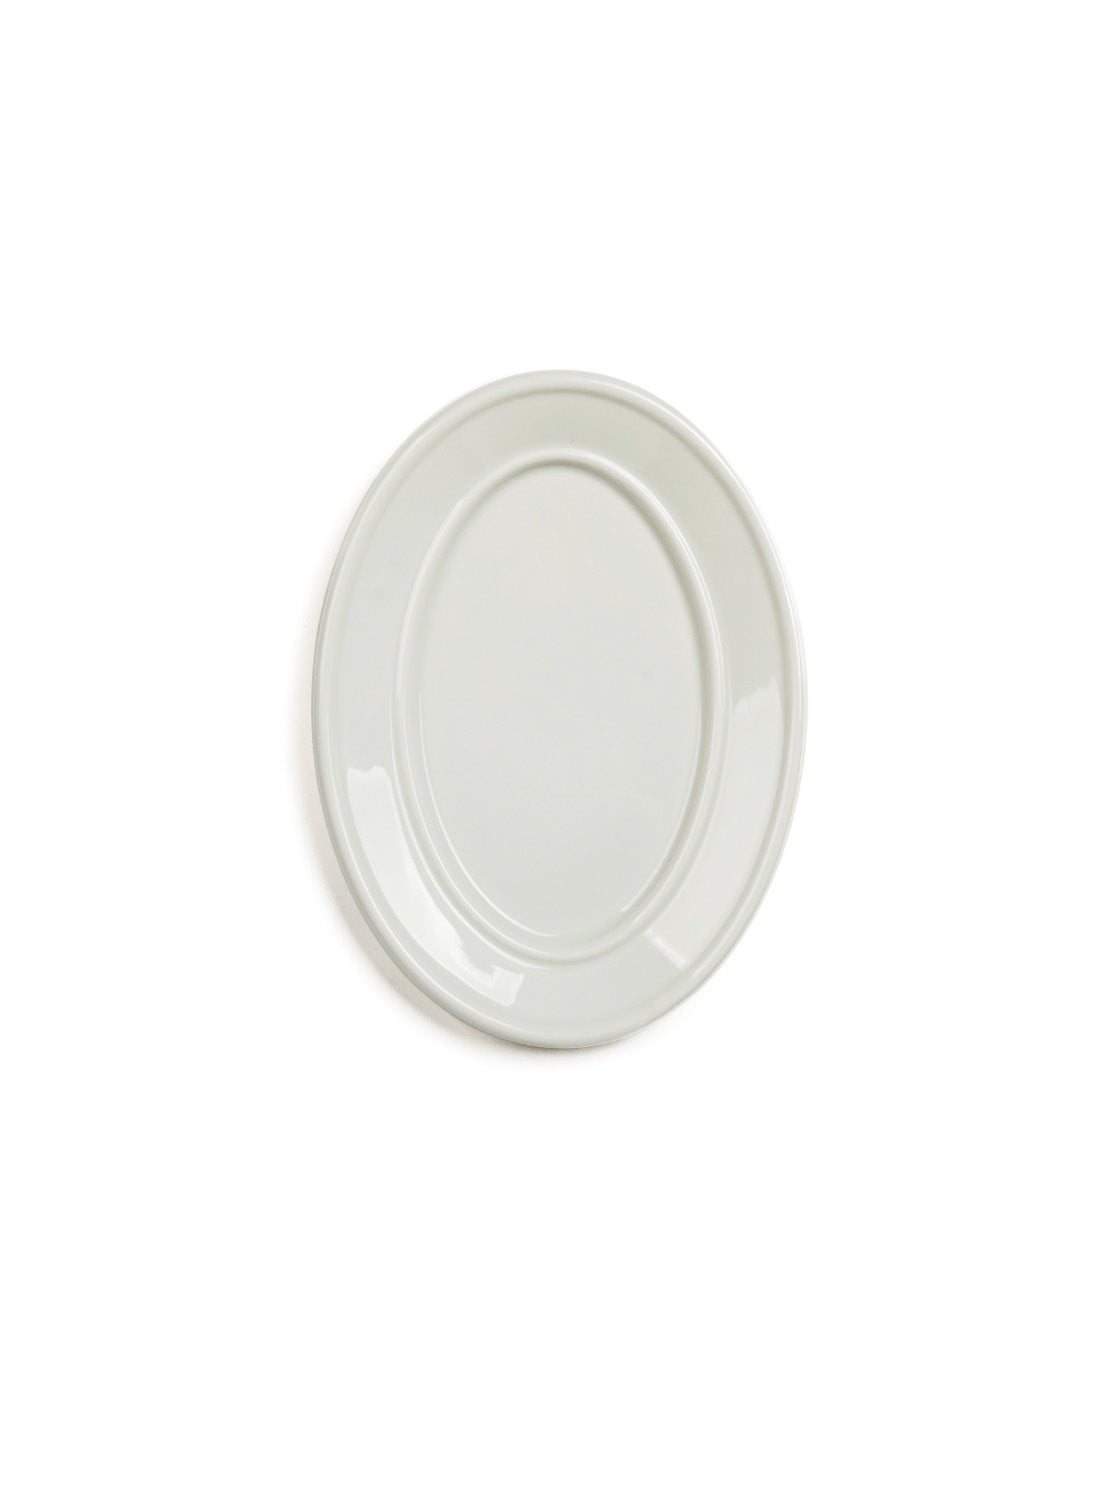 Mujagi Gloss Milk Oval Plate, large